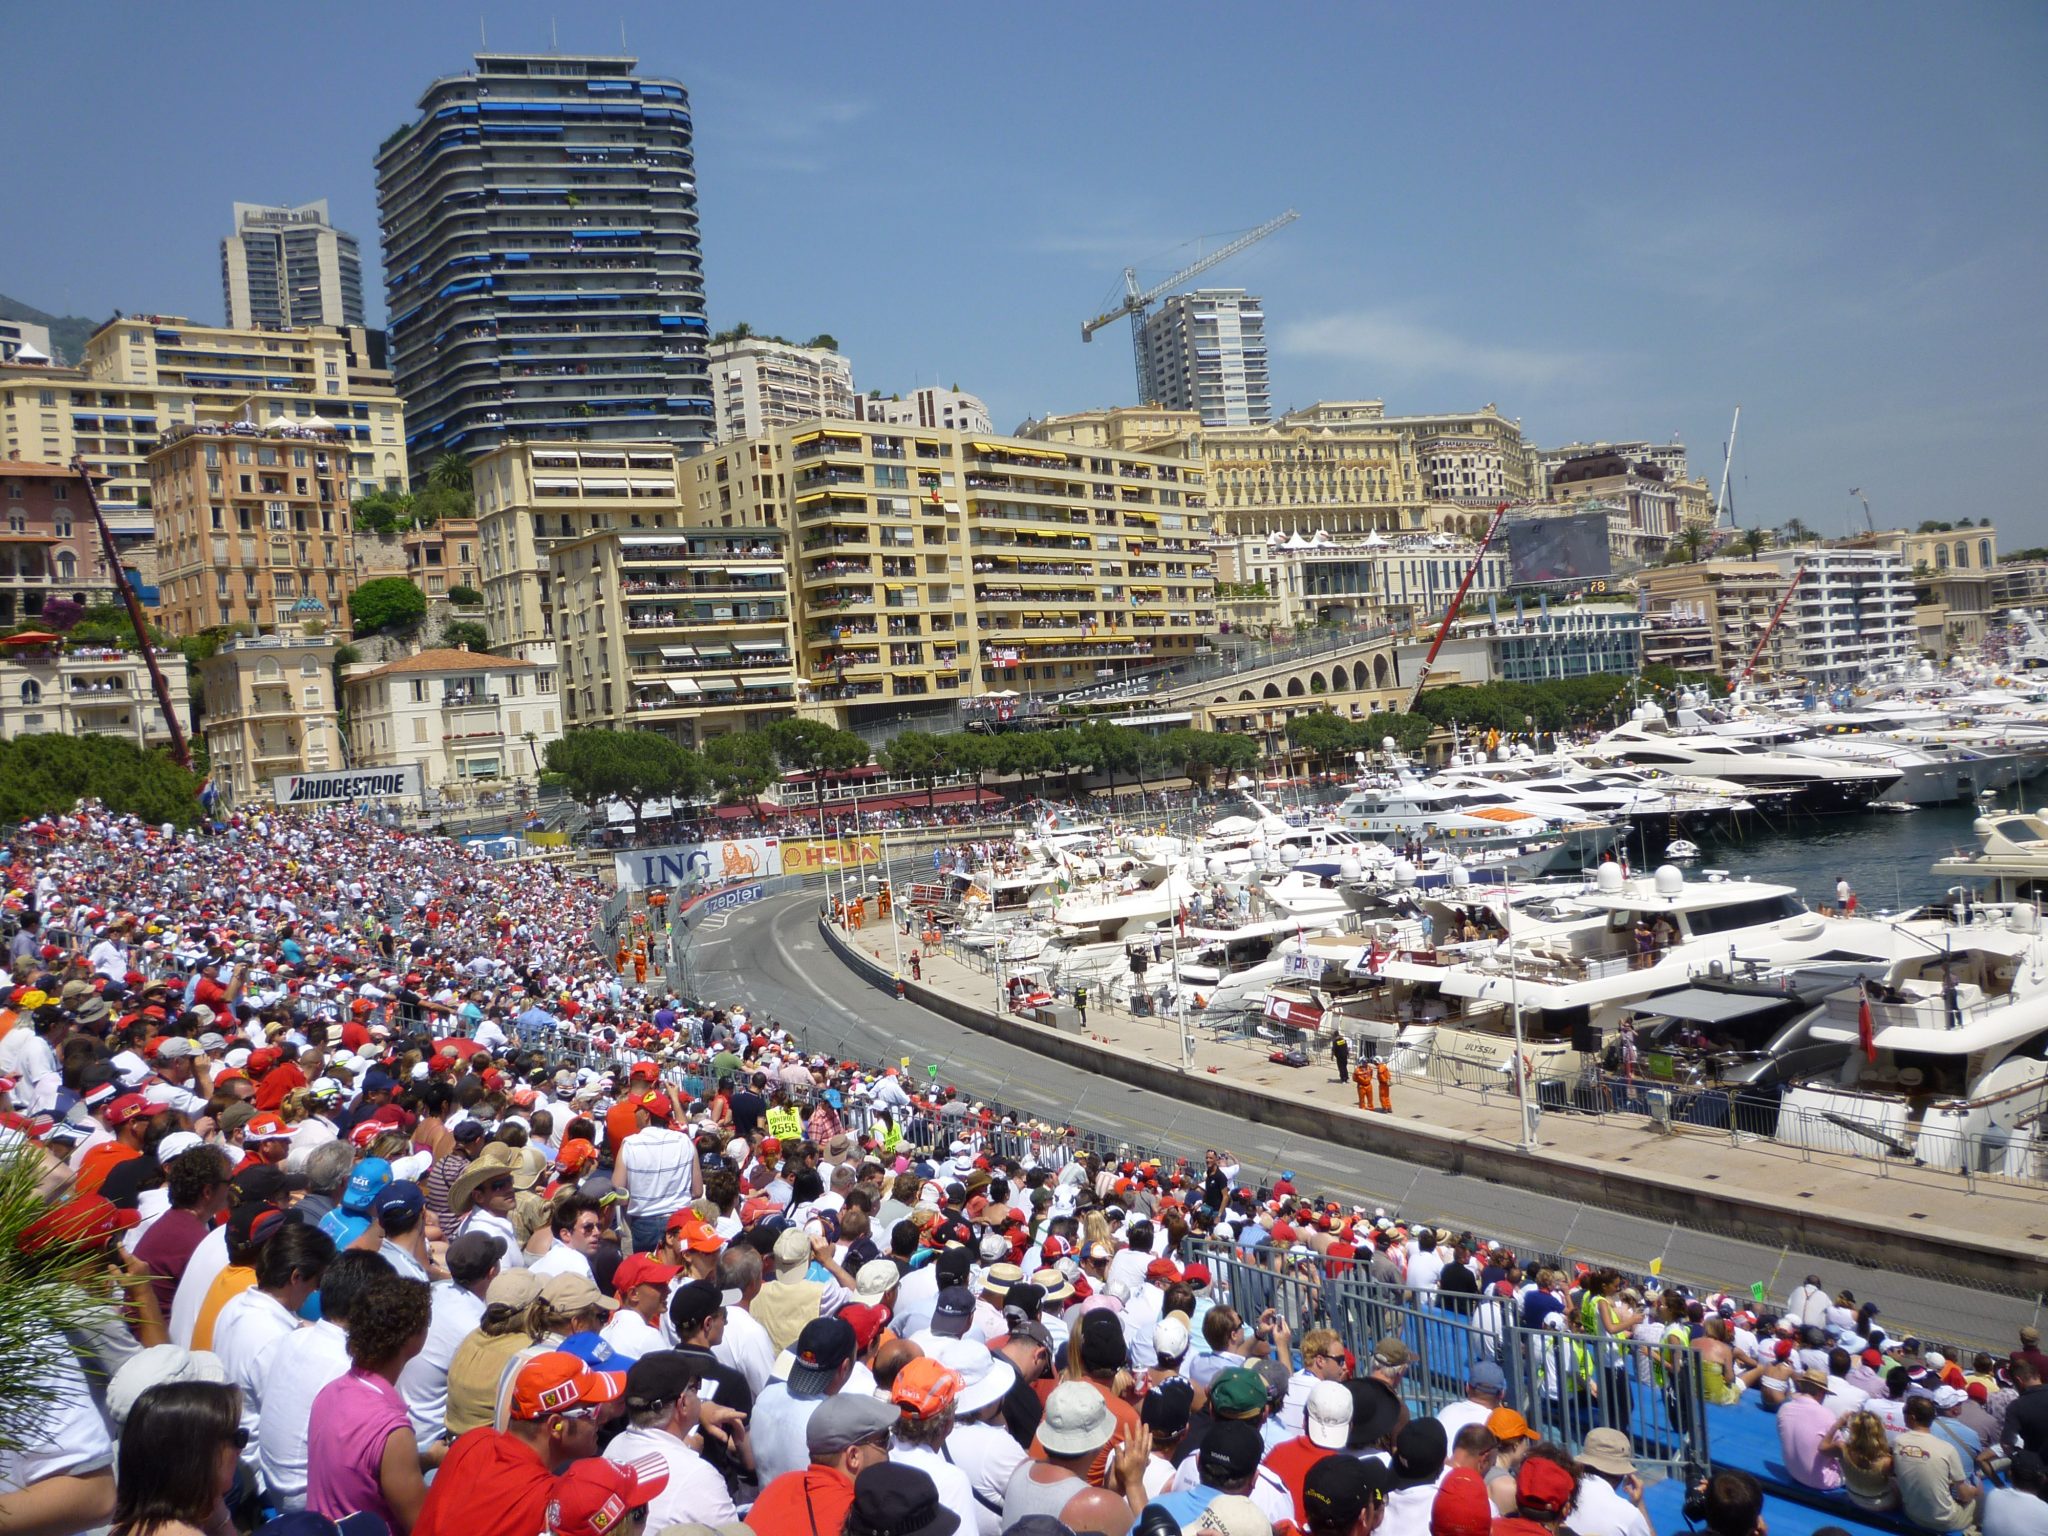 Monaco Grand Prix 2022 Schedule Monaco Grand Prix 2022 | Us Agent | F1 Travel Packages